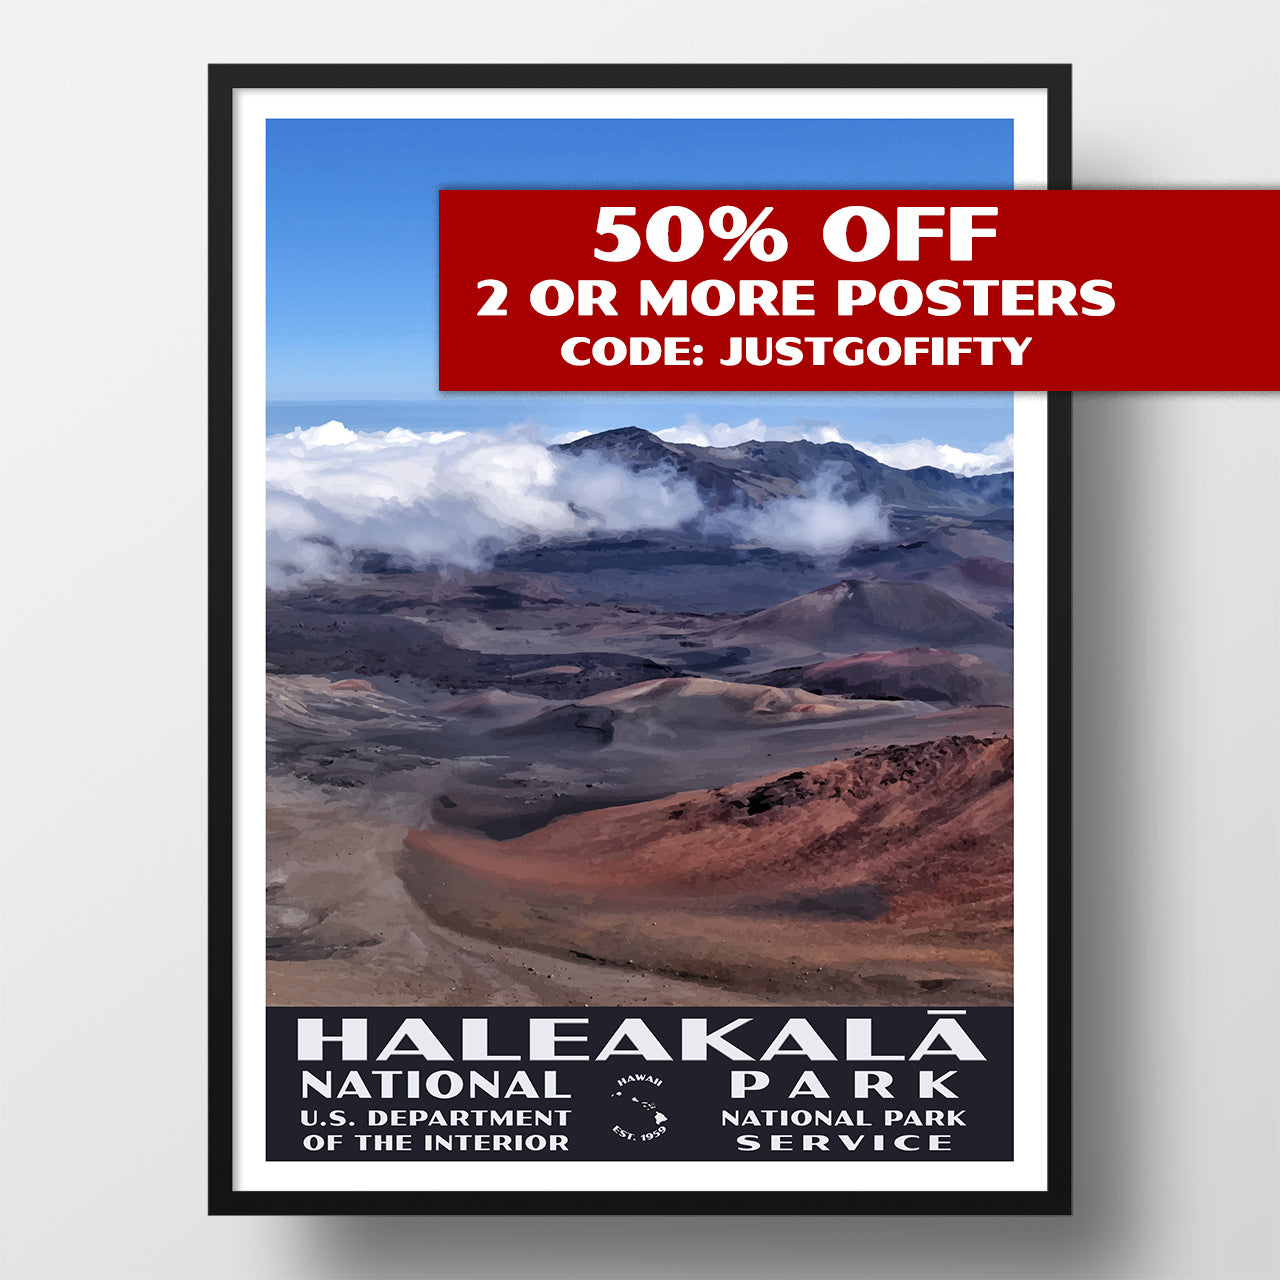 Haleakala National Park poster